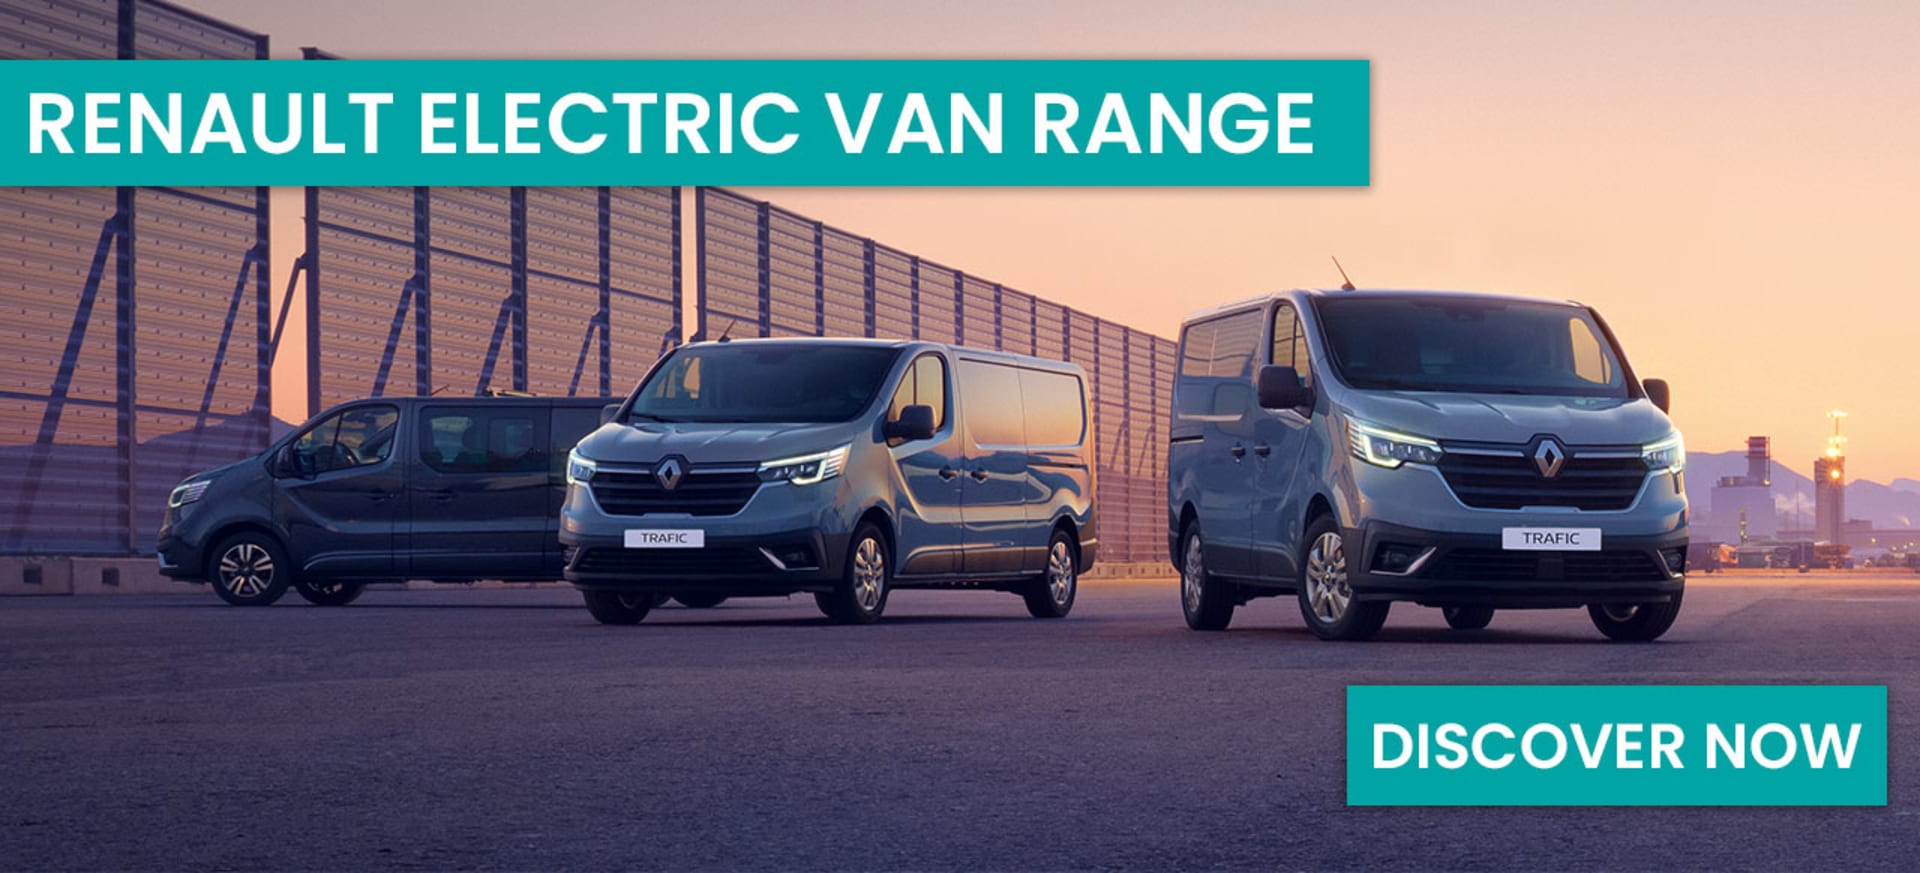 Renault Electric Van Range